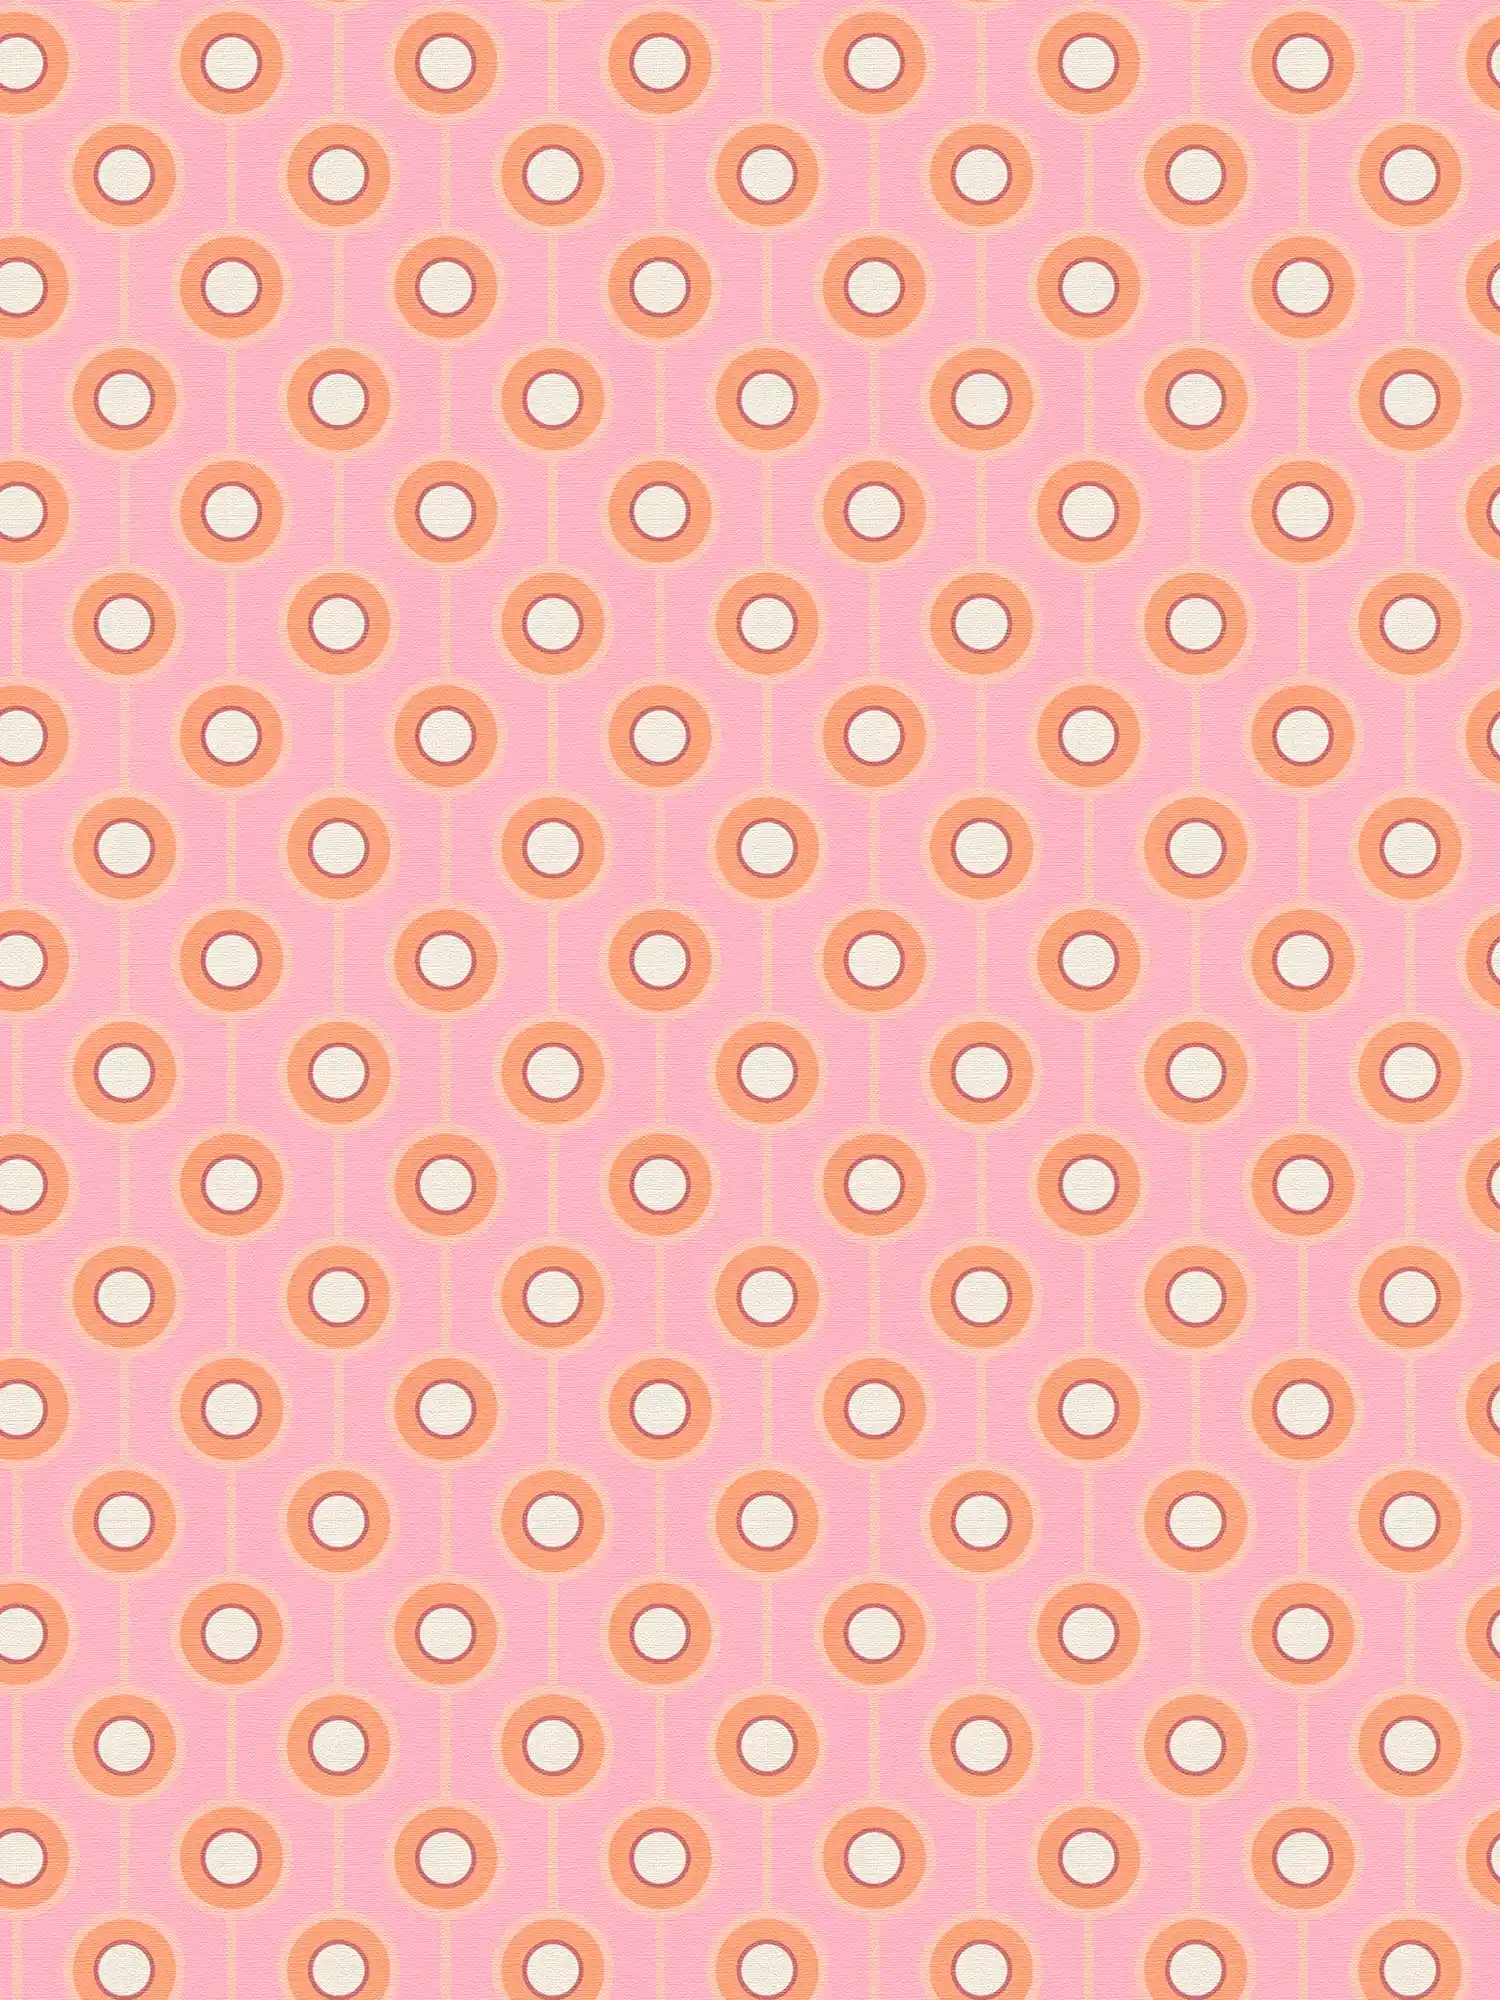 Lightly textured wallpaper with circle pattern - pink, orange, beige
